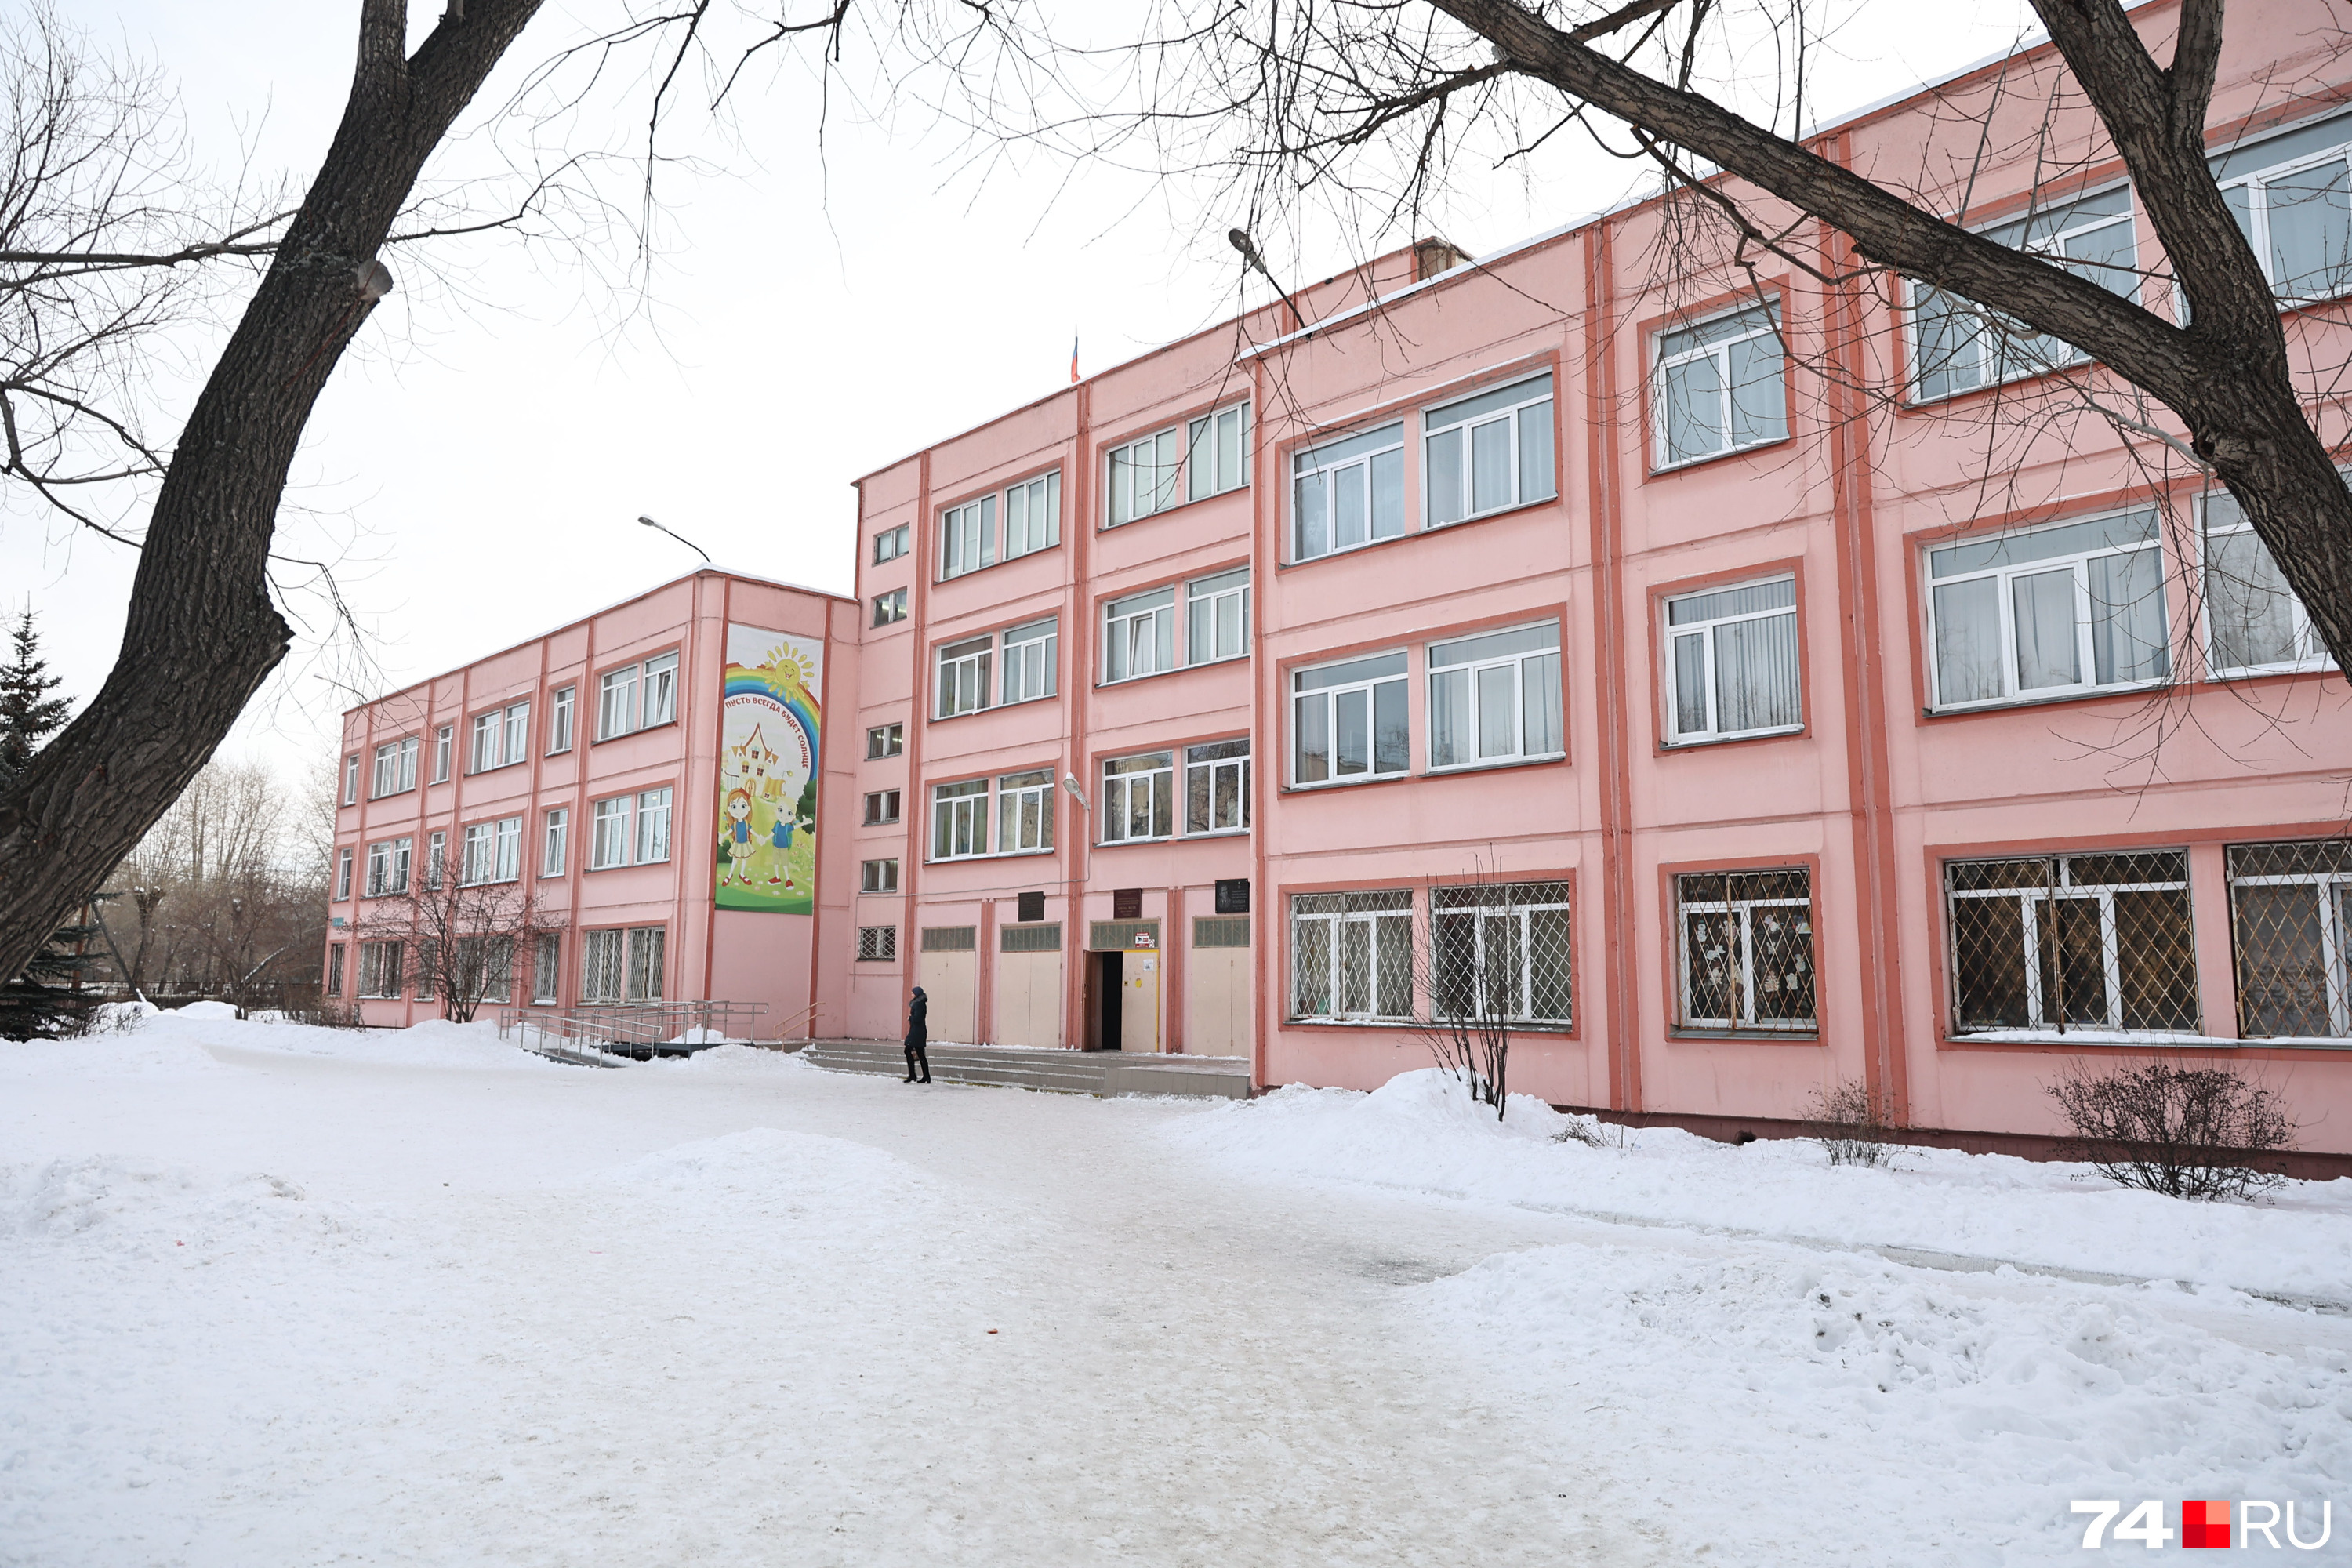 Конфликт произошел в школе № 105 на улице Кузнецова